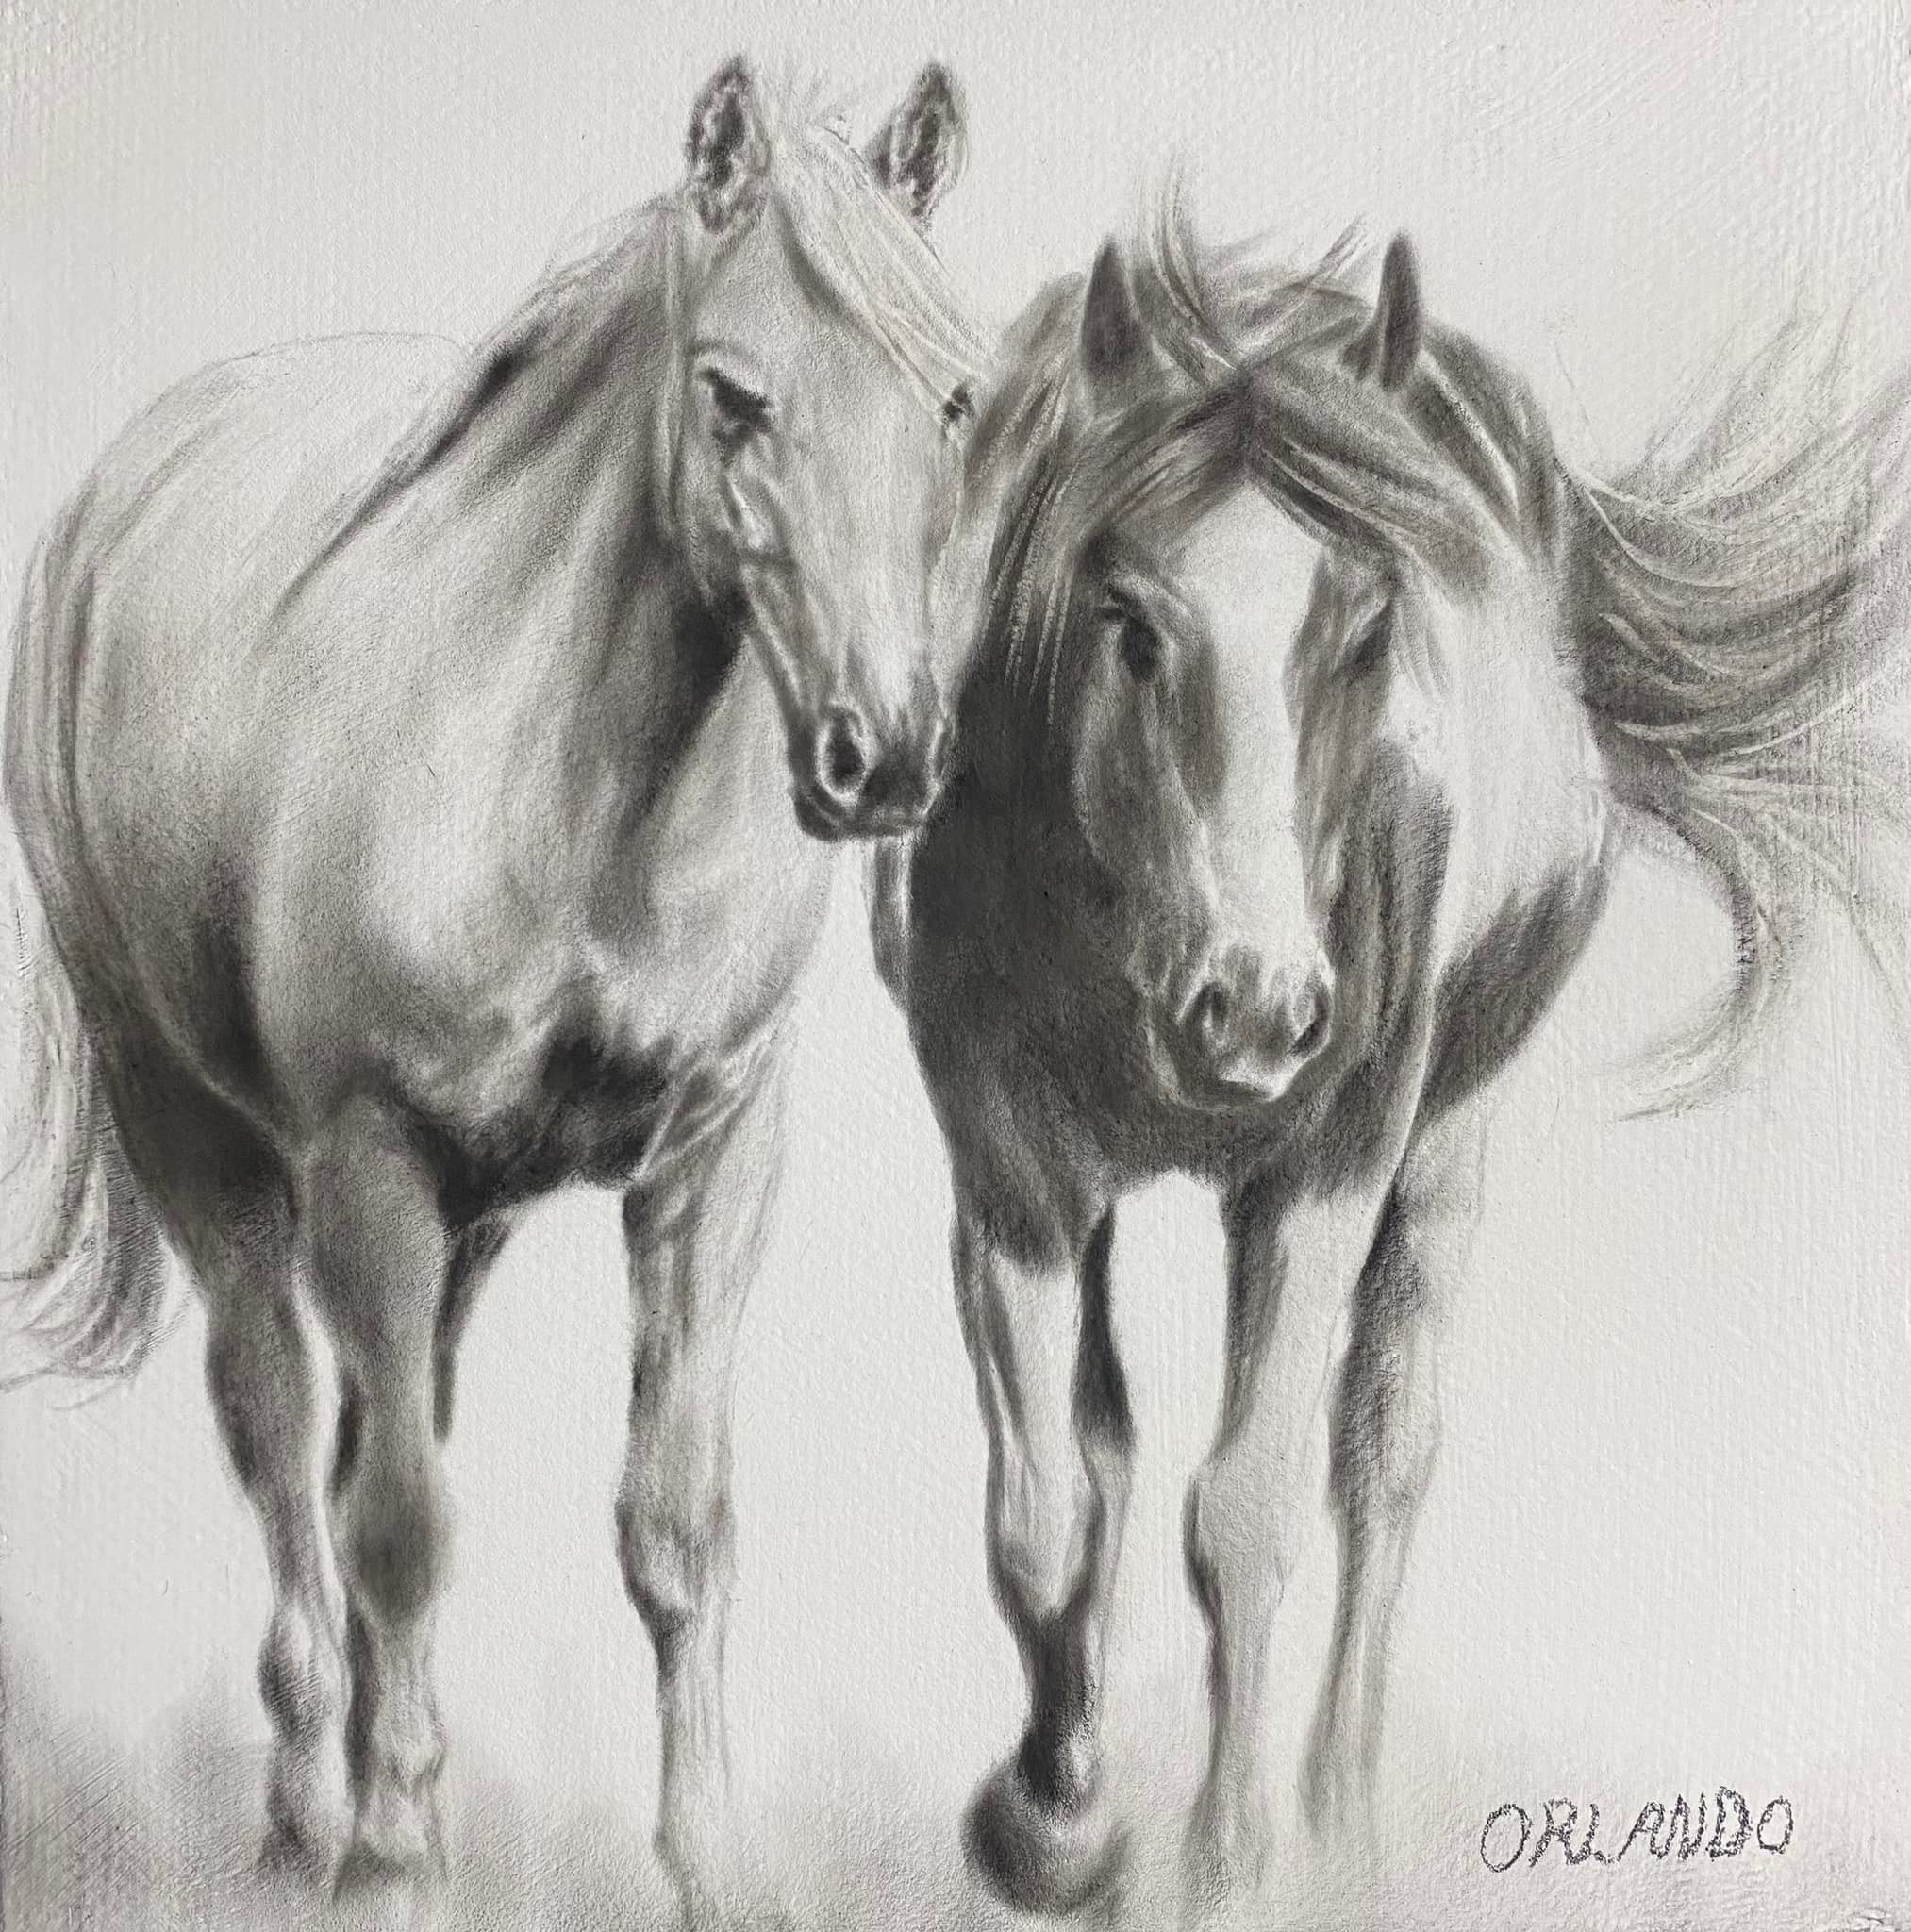 Crystal Orlando Wildlife / Equine Artist